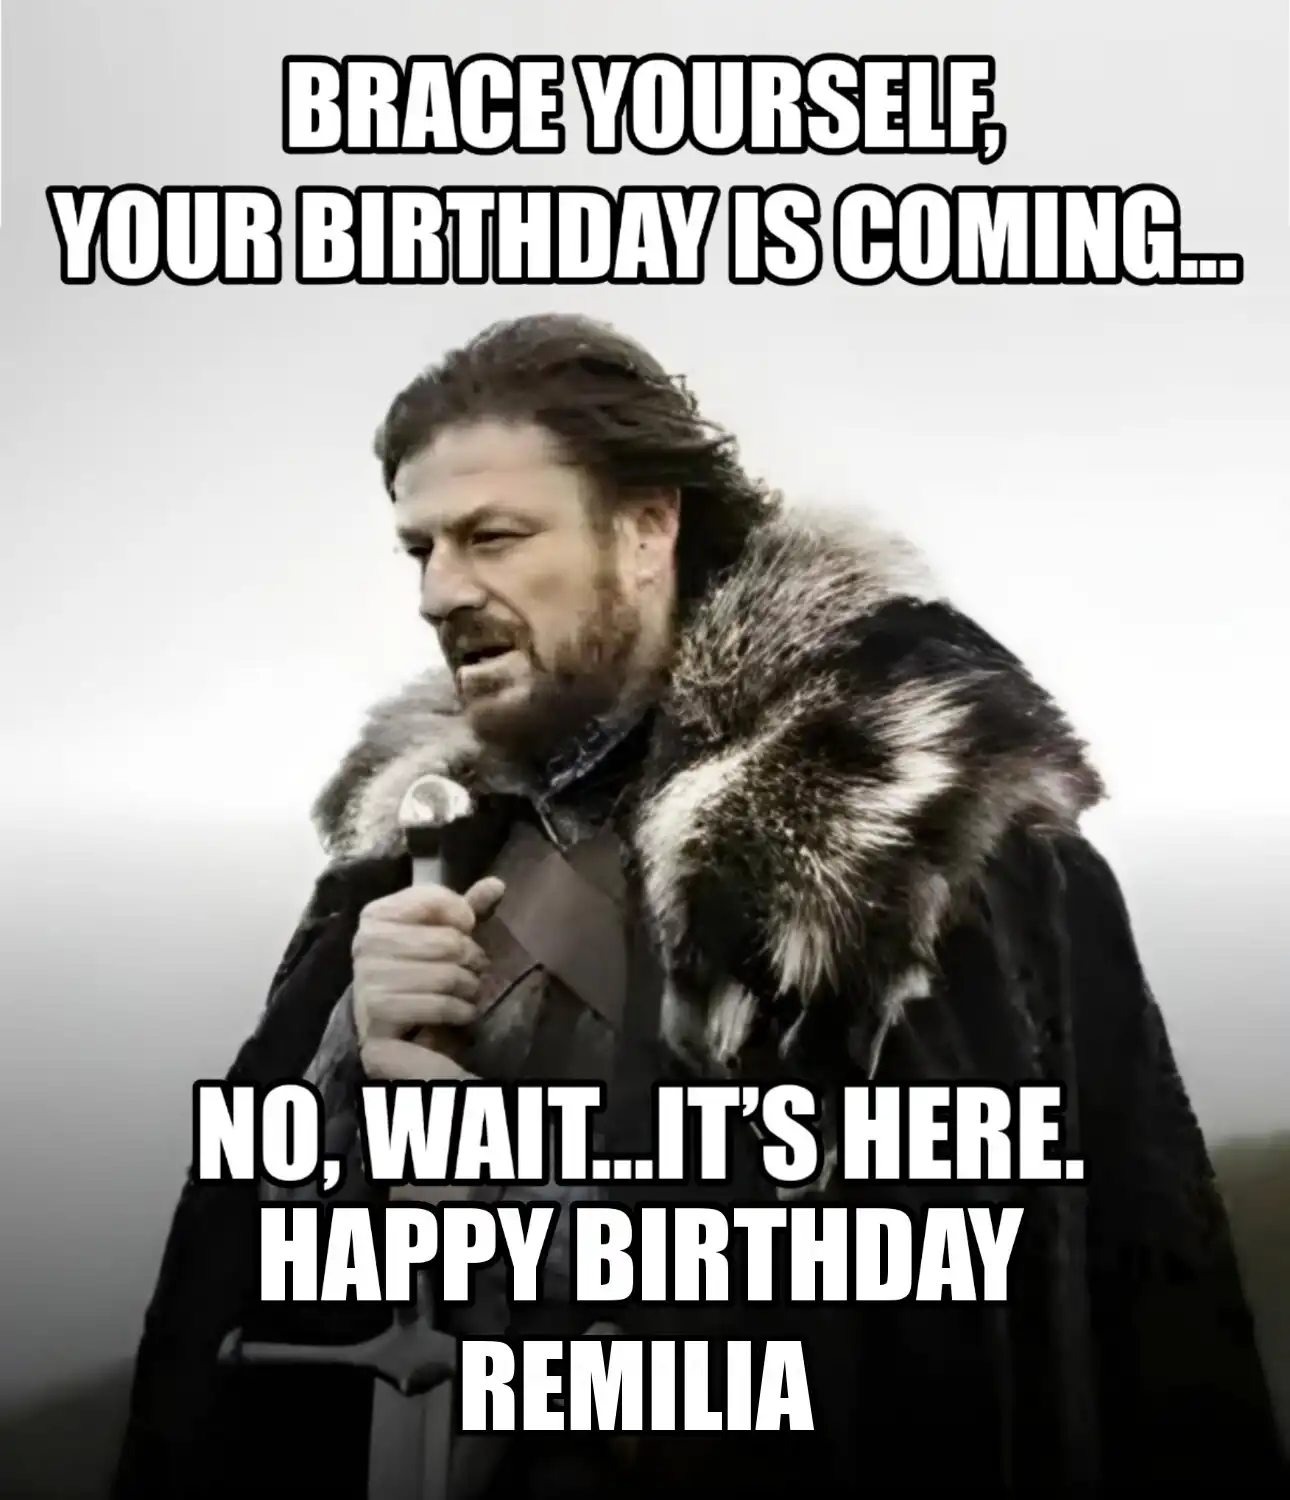 Happy Birthday Remilia Brace Yourself Your Birthday Is Coming Meme